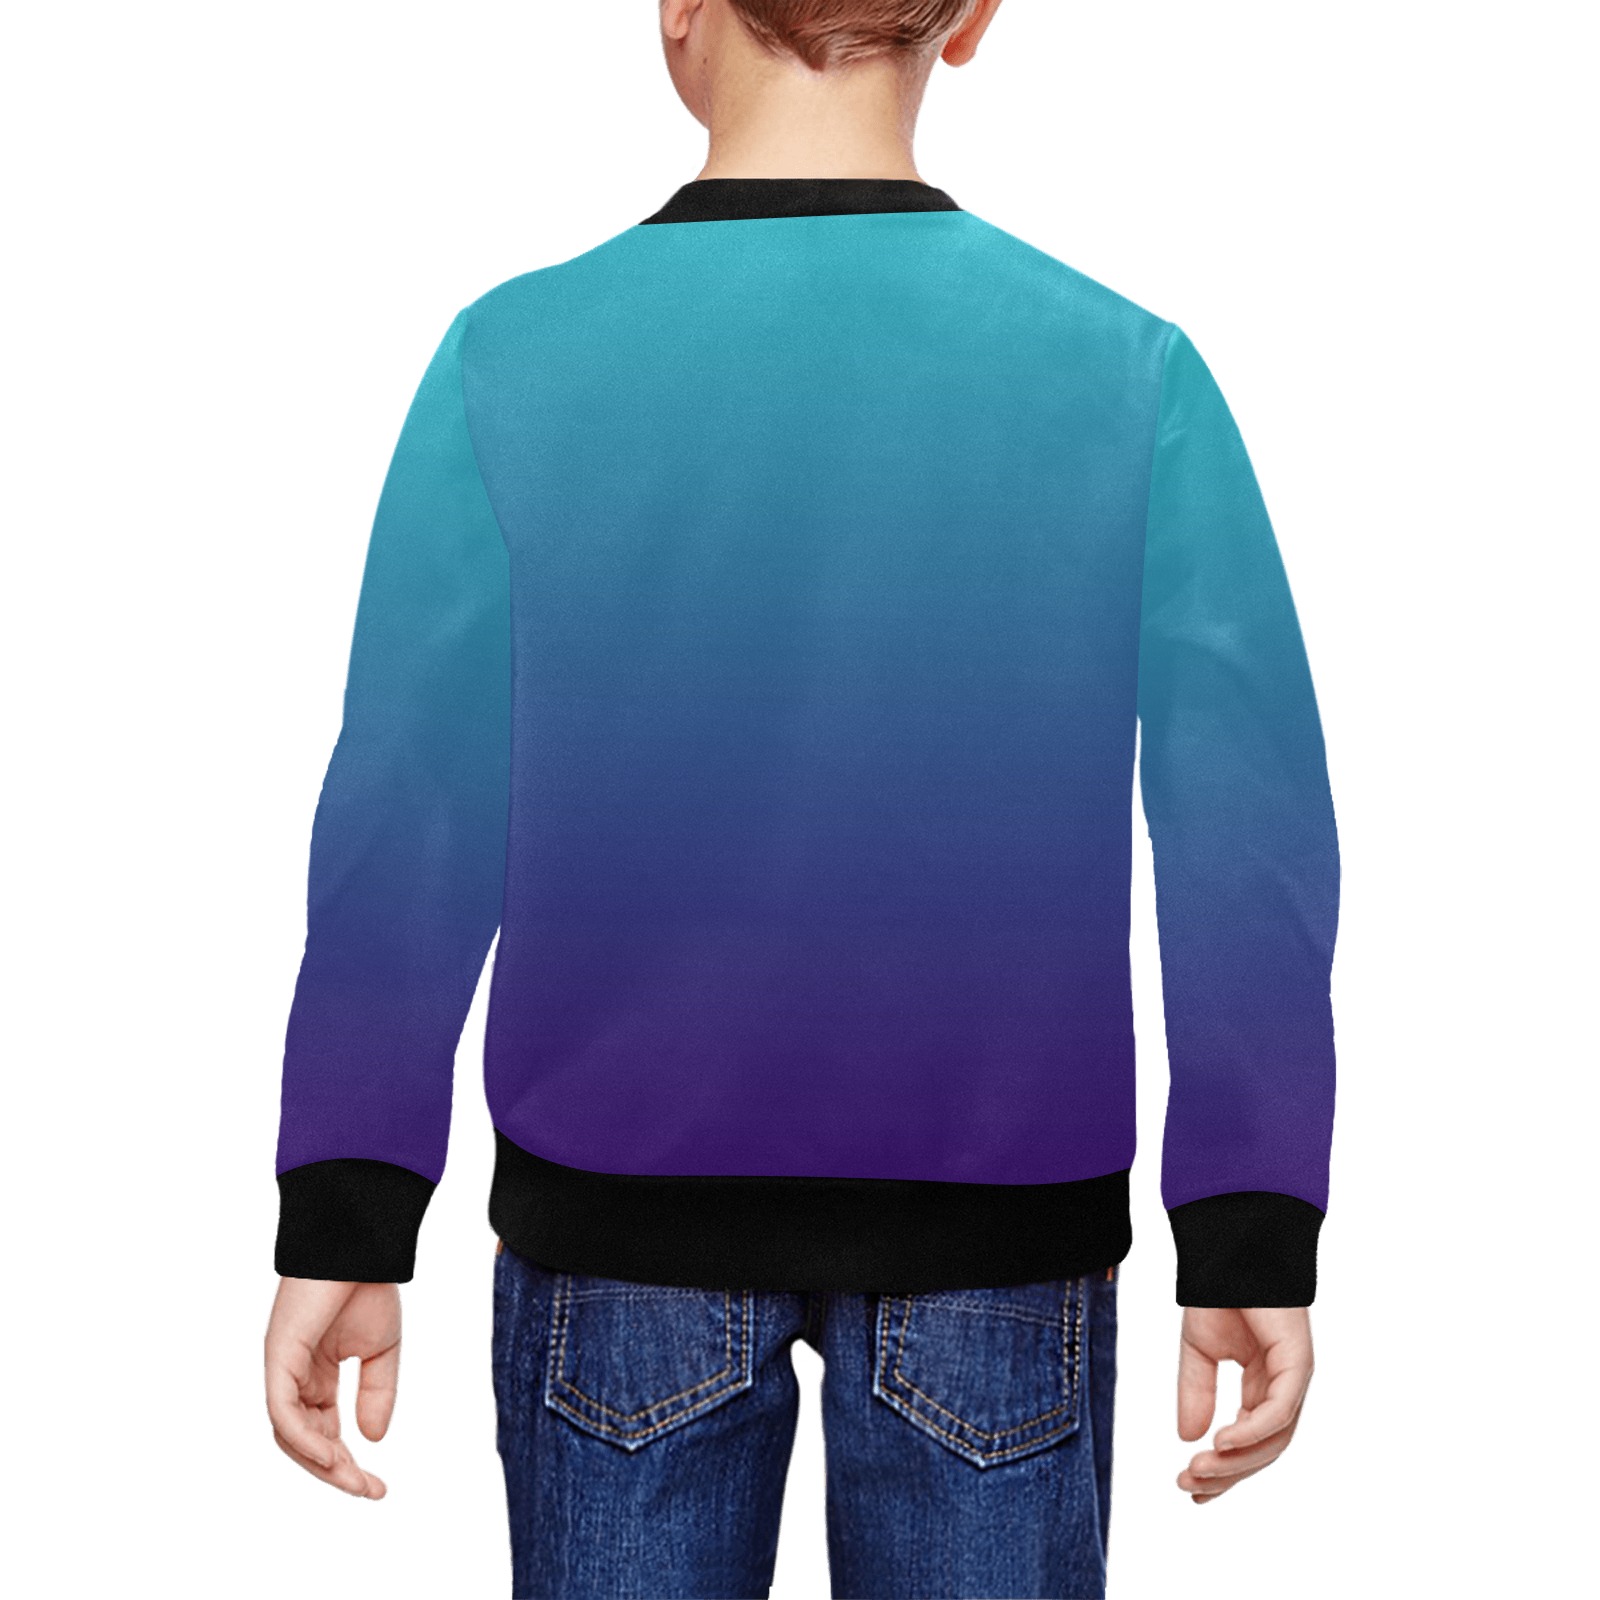 blu mau All Over Print Crewneck Sweatshirt for Kids (Model H29)